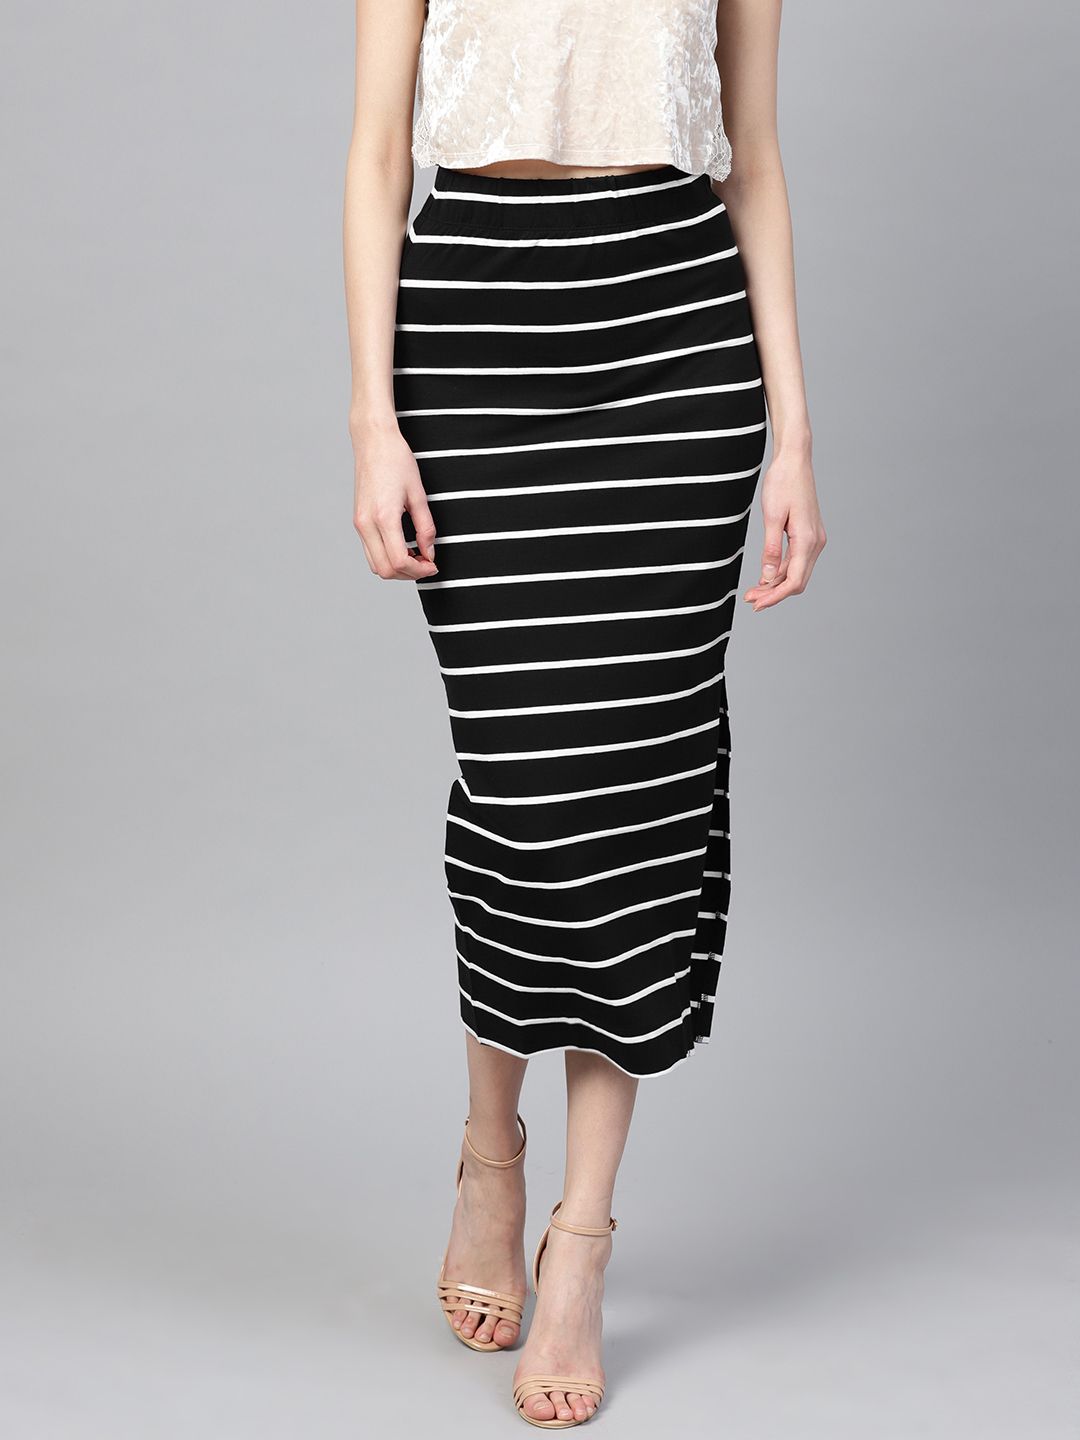 SASSAFRAS Black & White Striped Pencil Skirt Price in India